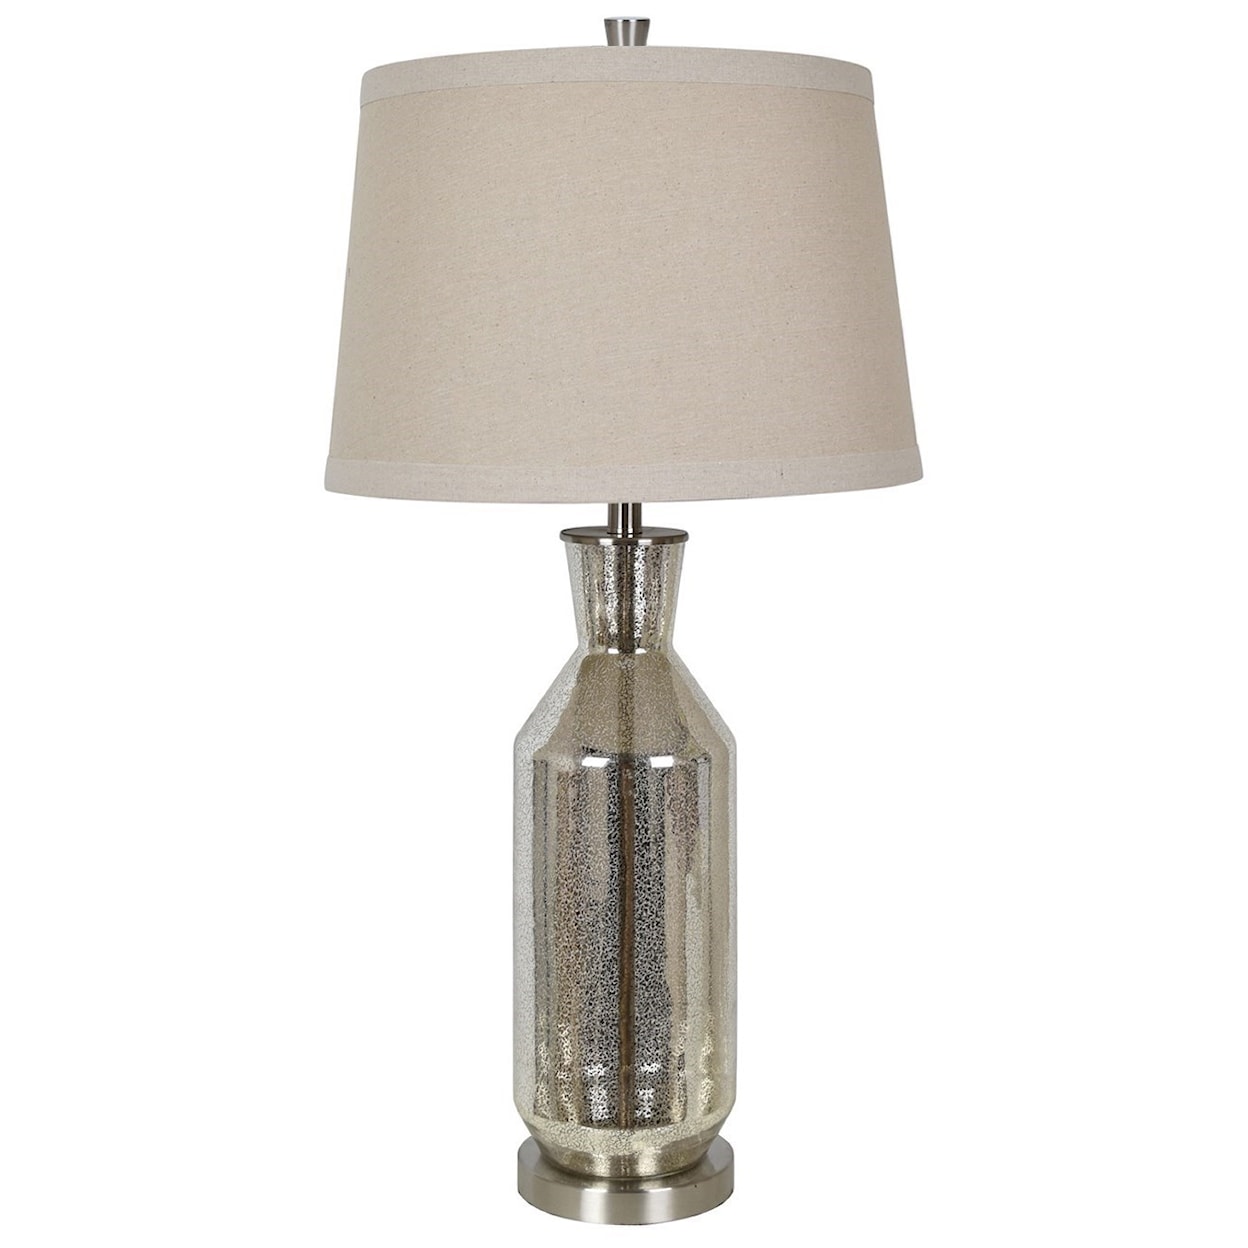 Crestview Collection Lighting Jaden Table Lamp I